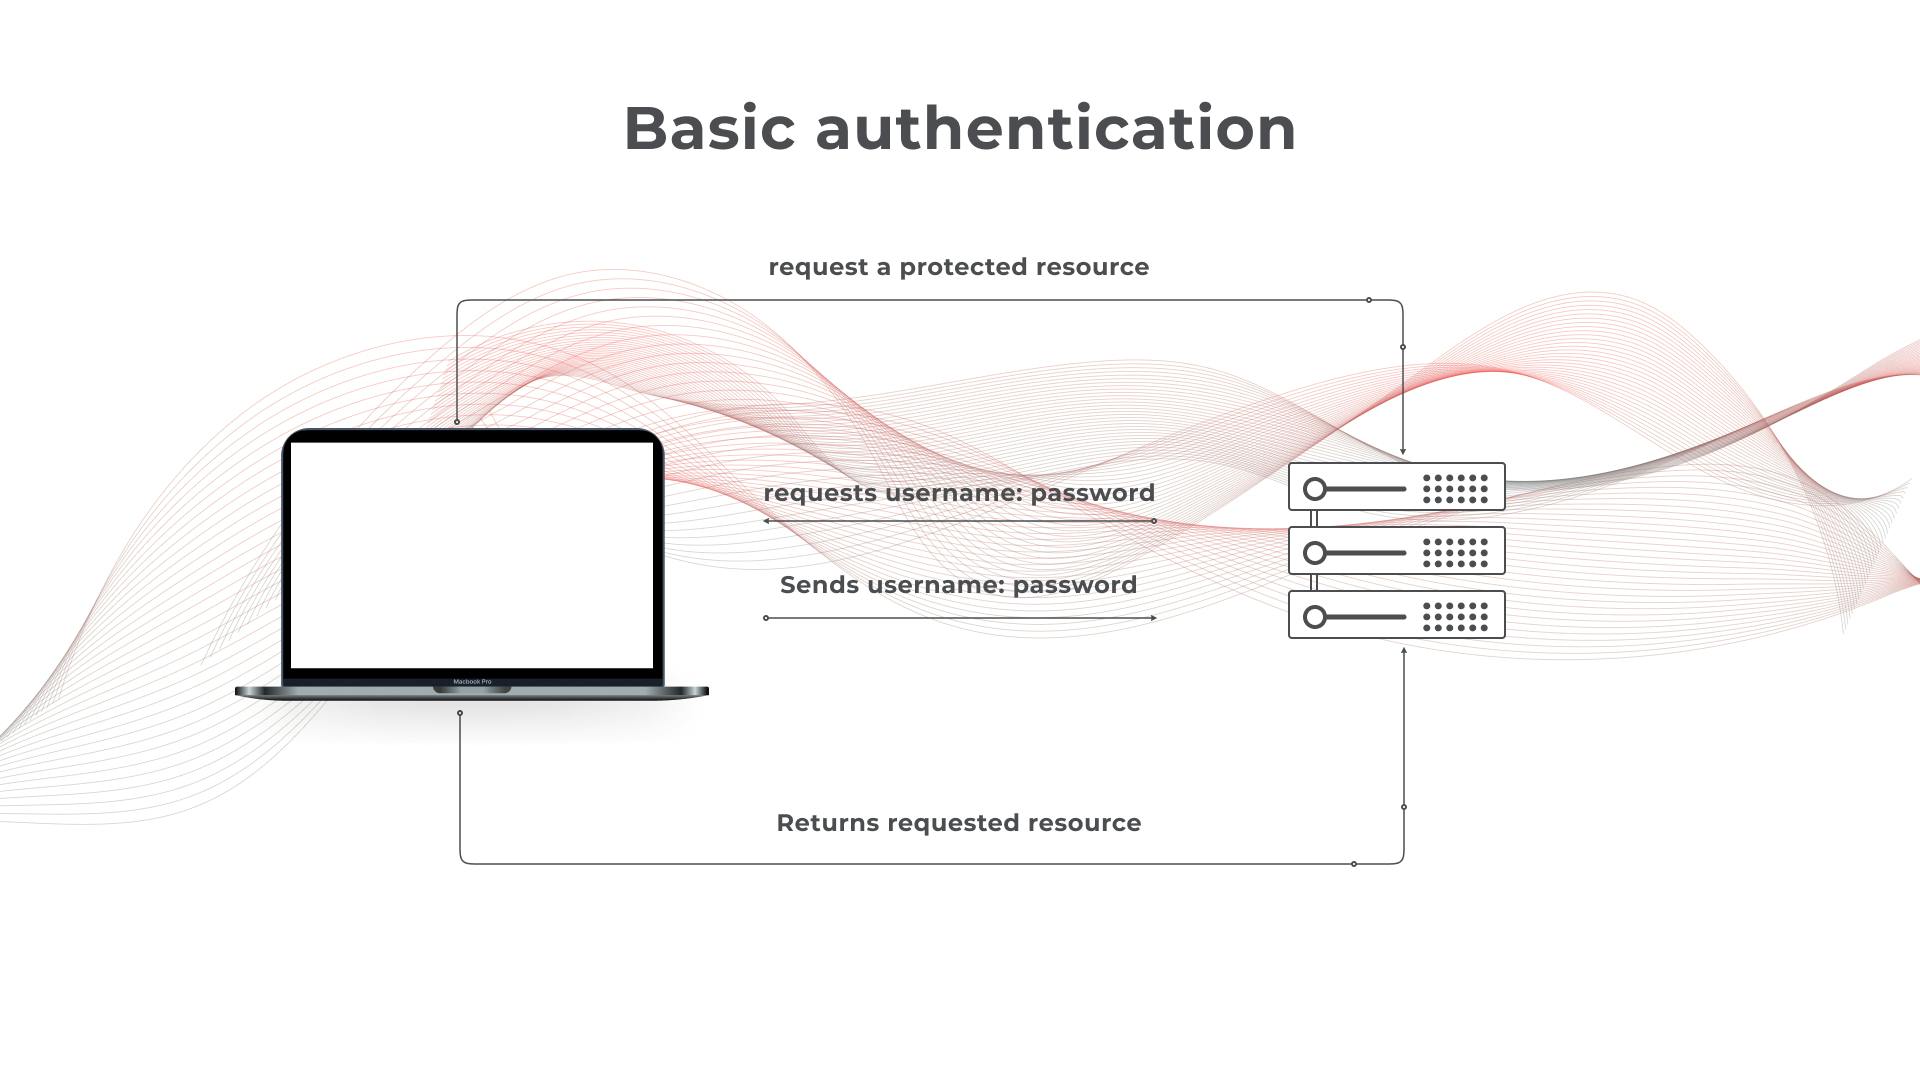 HTTP Basic Authentication